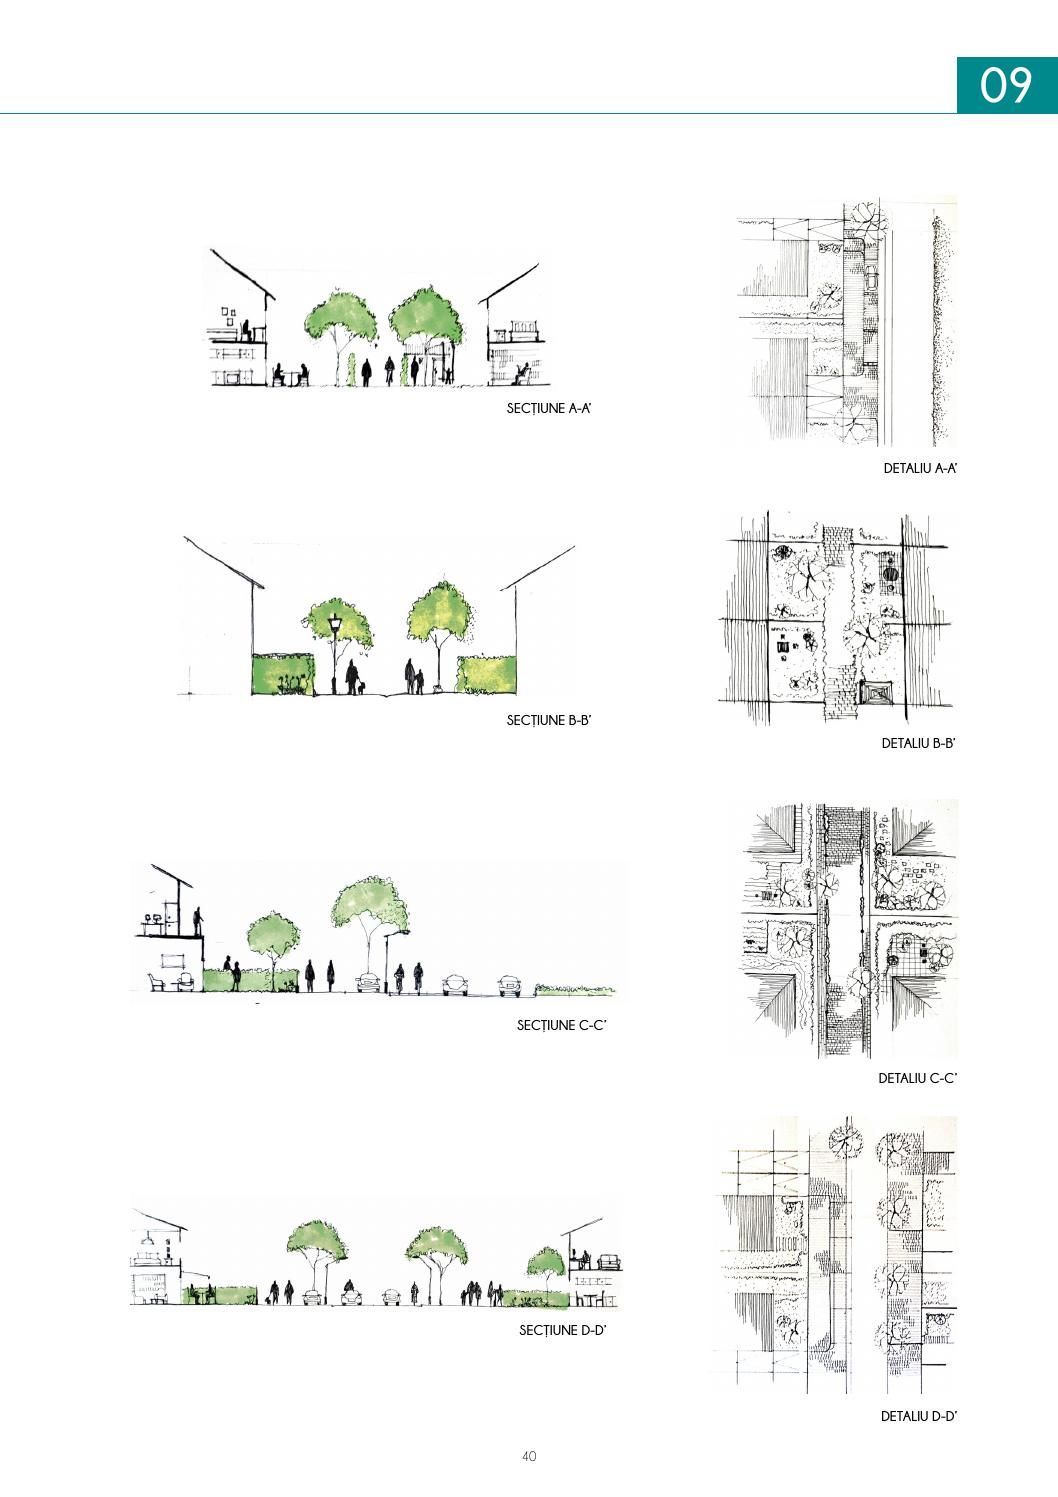 16 urban planting design ideas